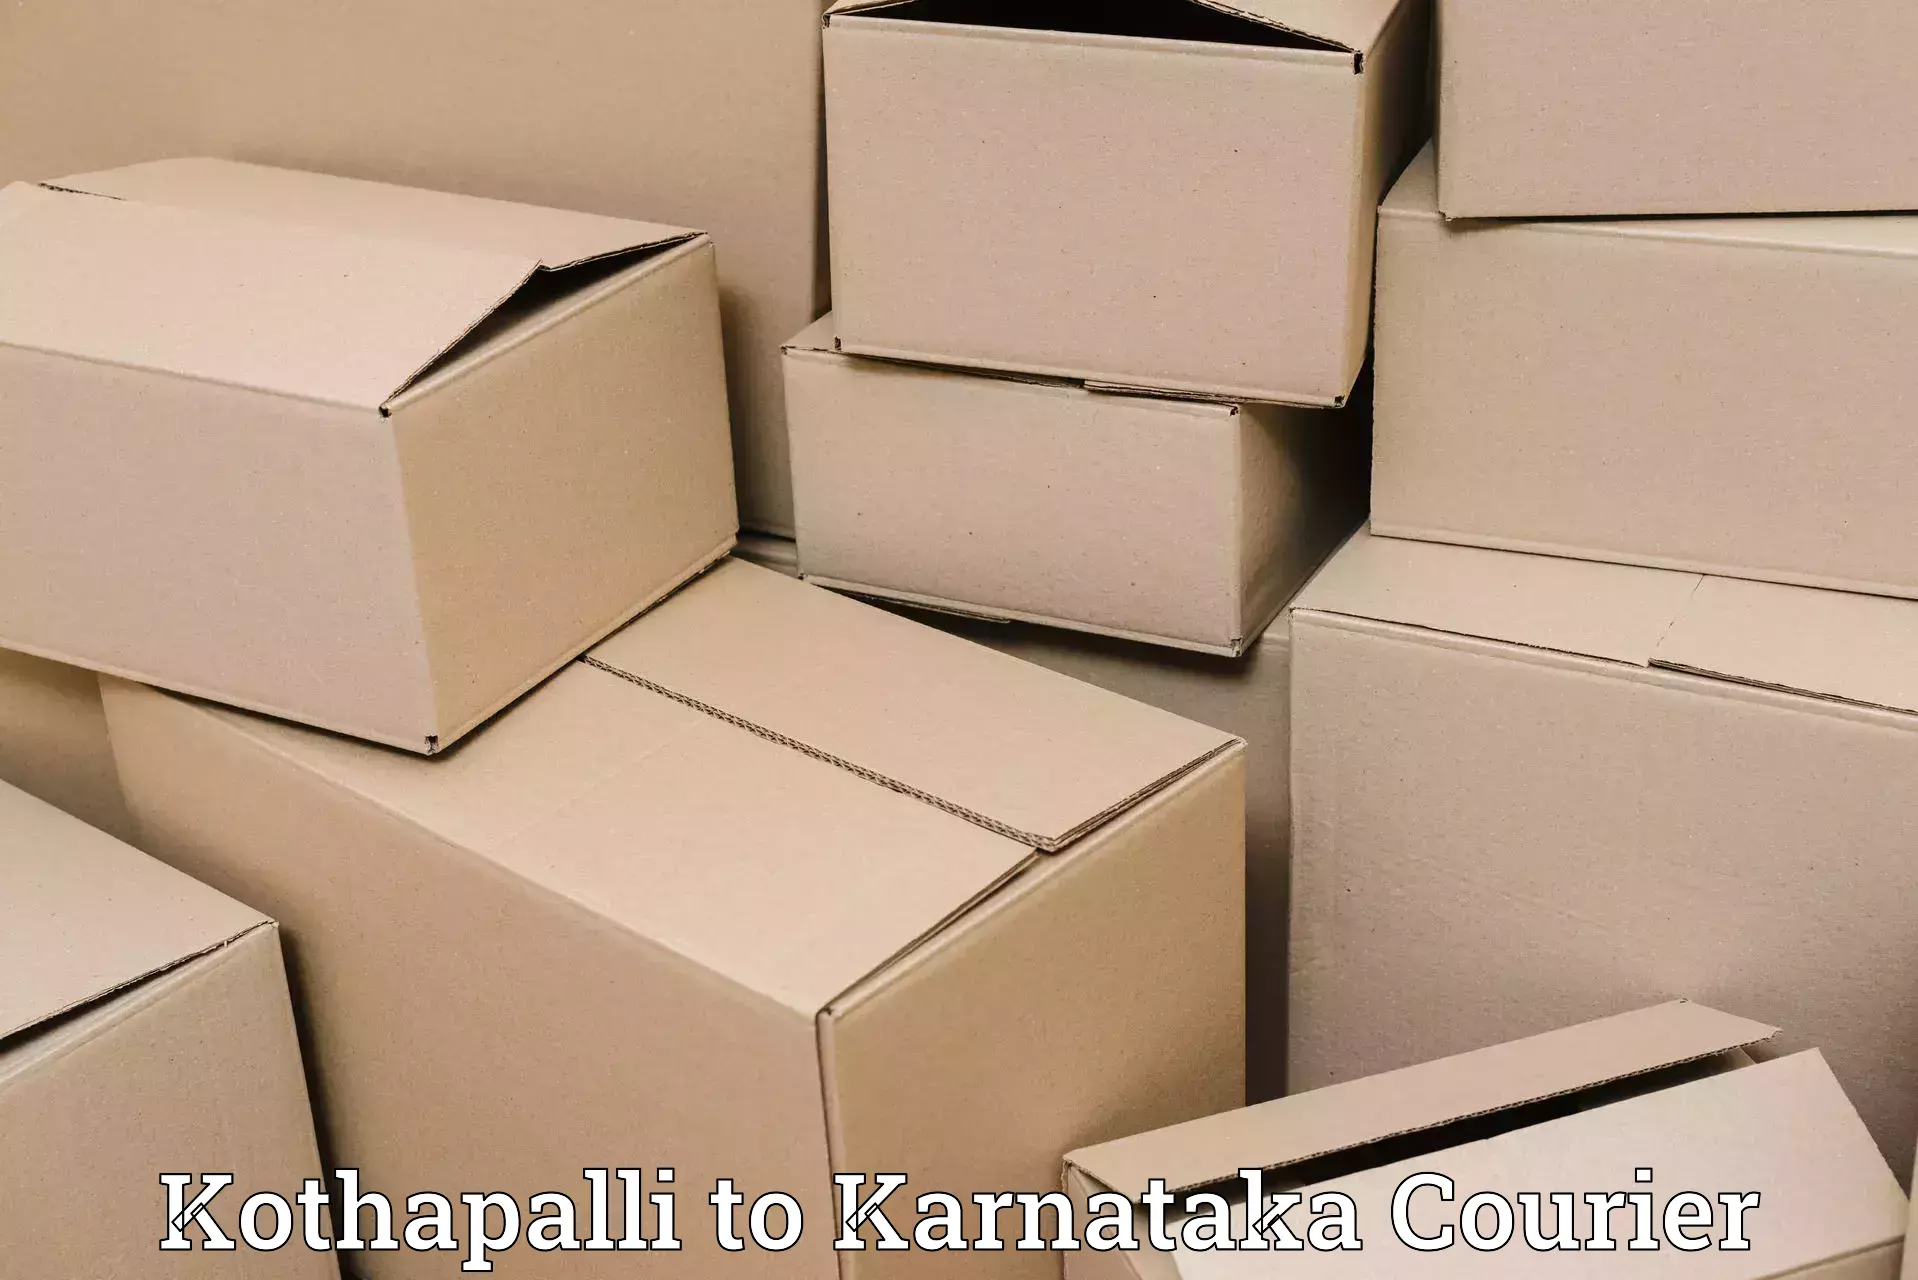 Supply chain efficiency Kothapalli to Gonikoppal